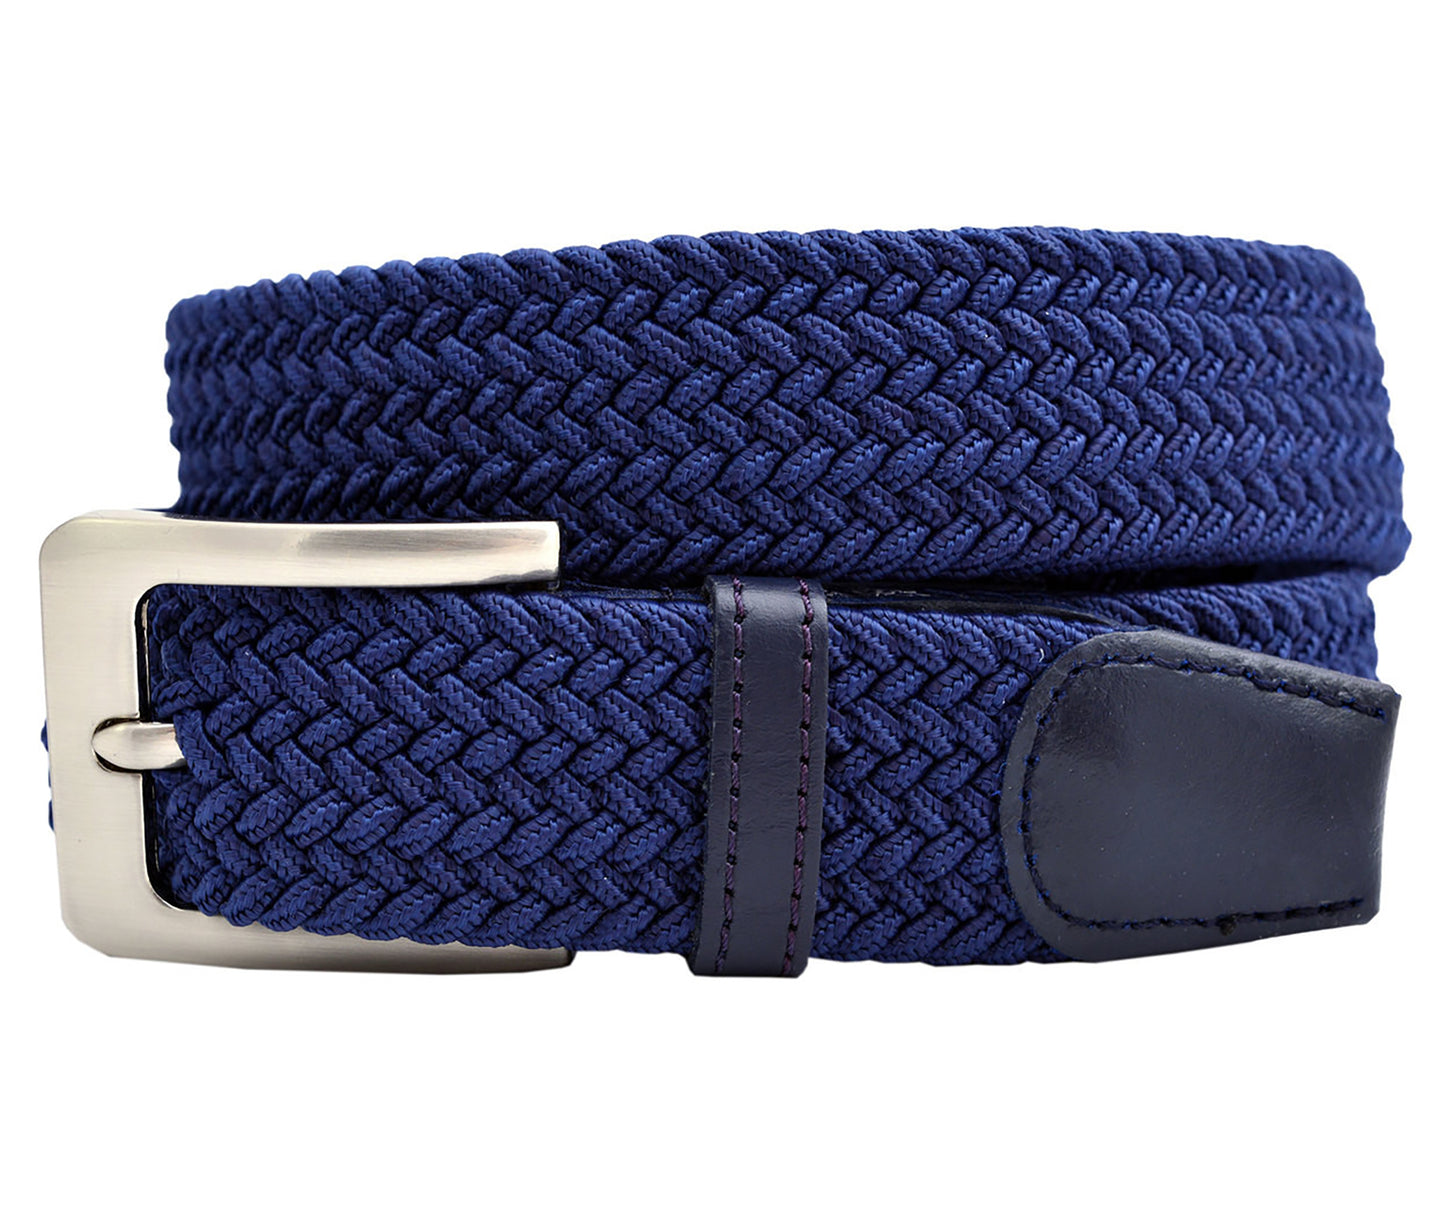 Elastic 1 1/4" Wide Woven Stretch Web Belt - Navy